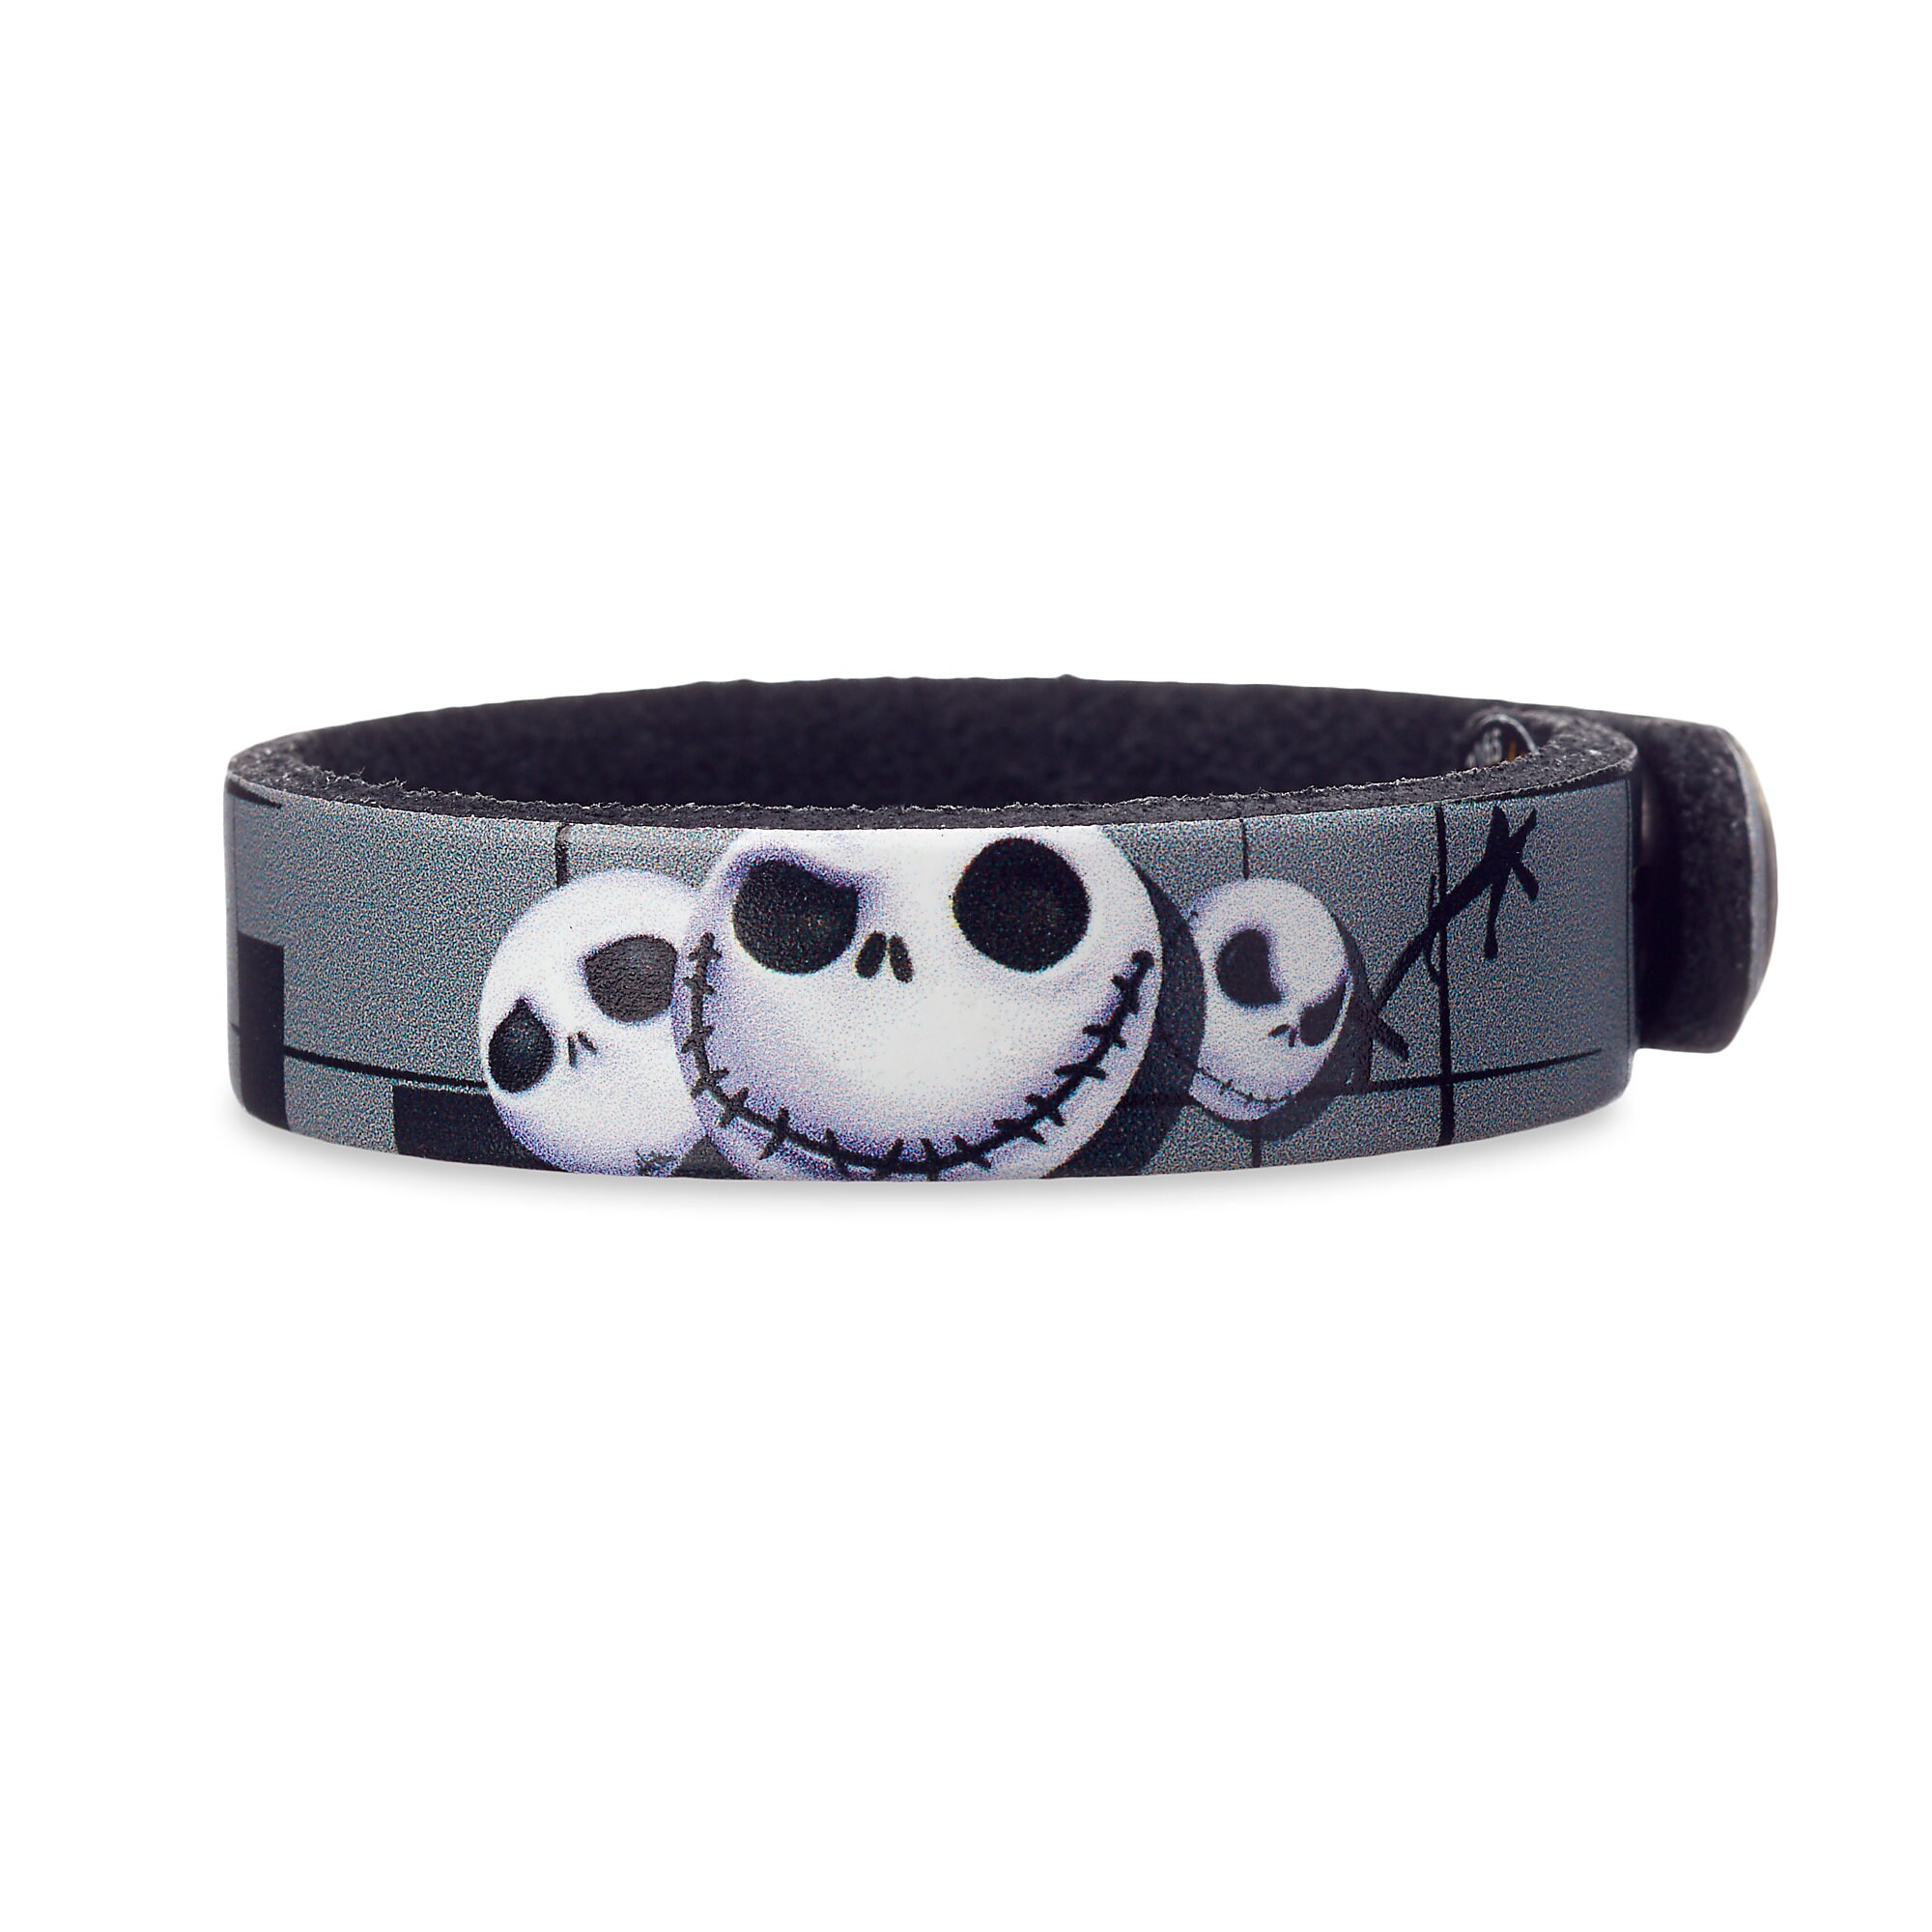 Jack Skellington Leather Bracelet - Personalizable